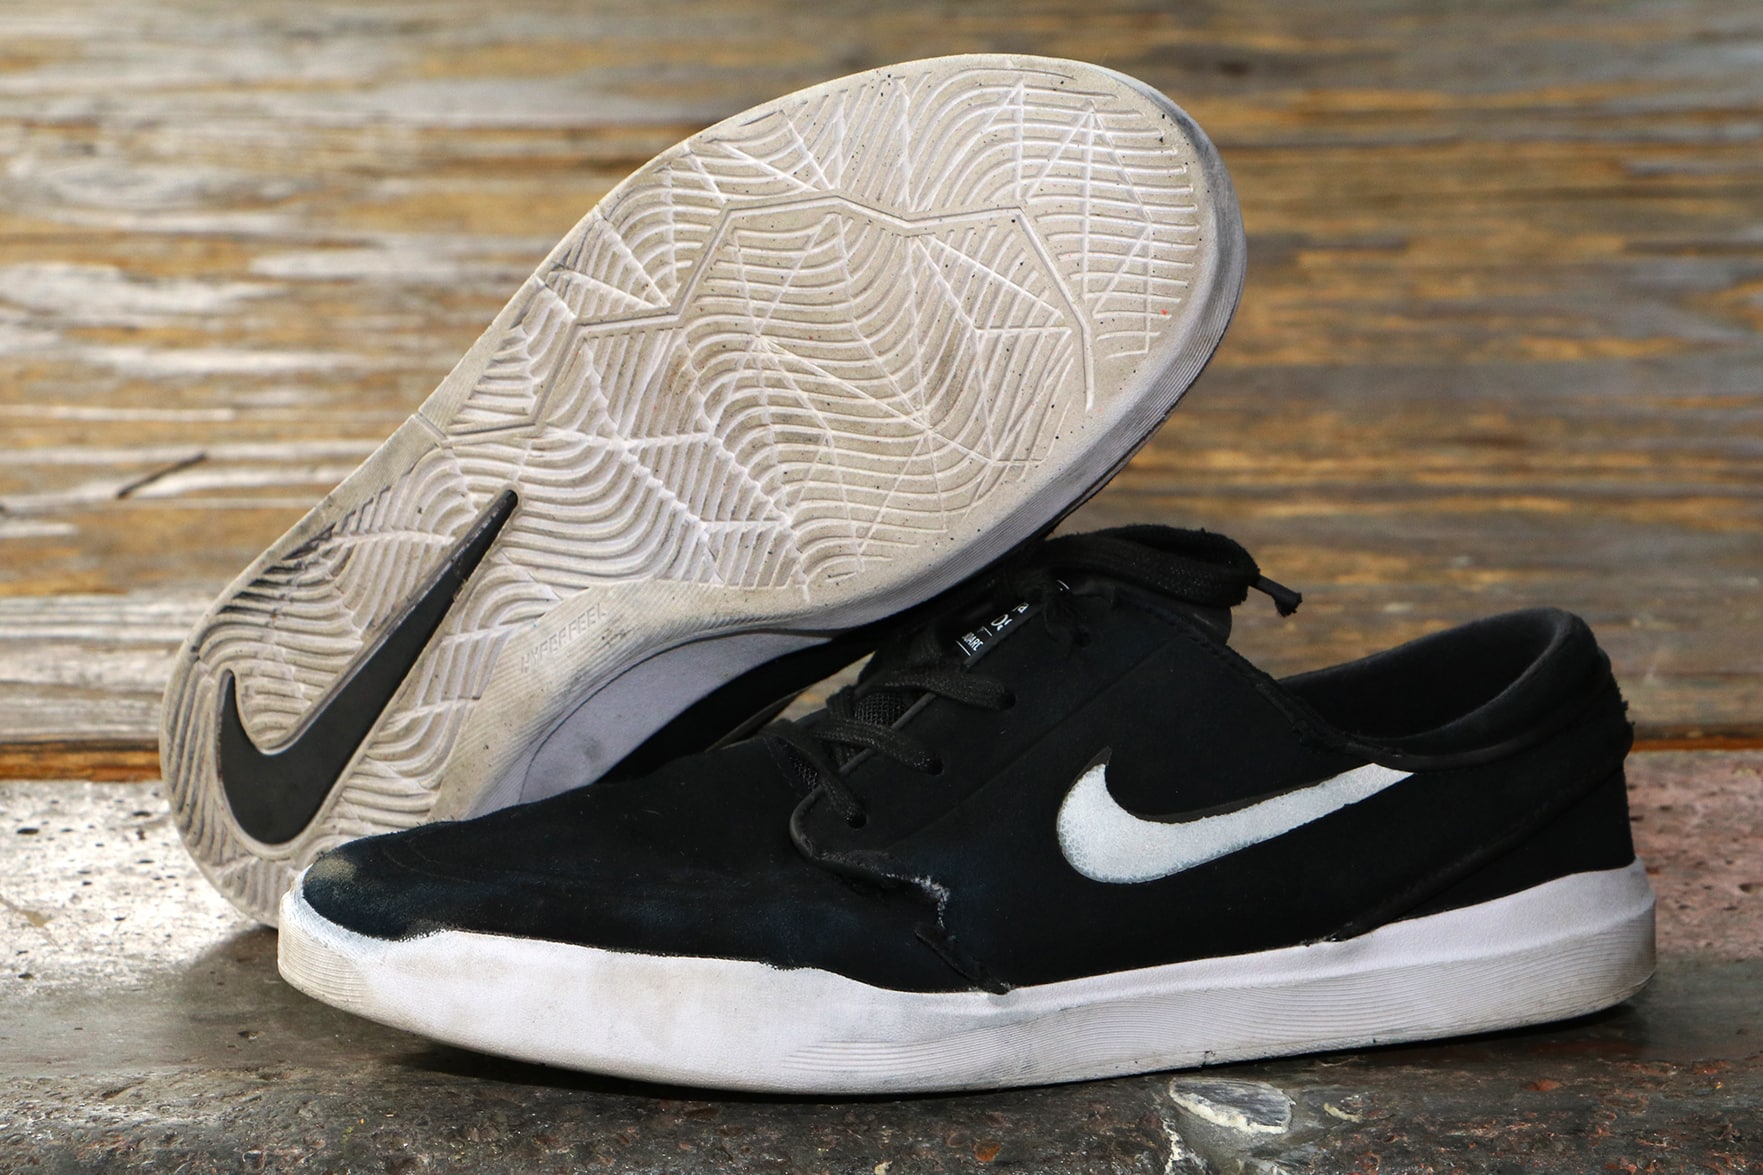 Nike SB Janoski Hyperfeel Skate Shoes Wear Test Review | Tactics